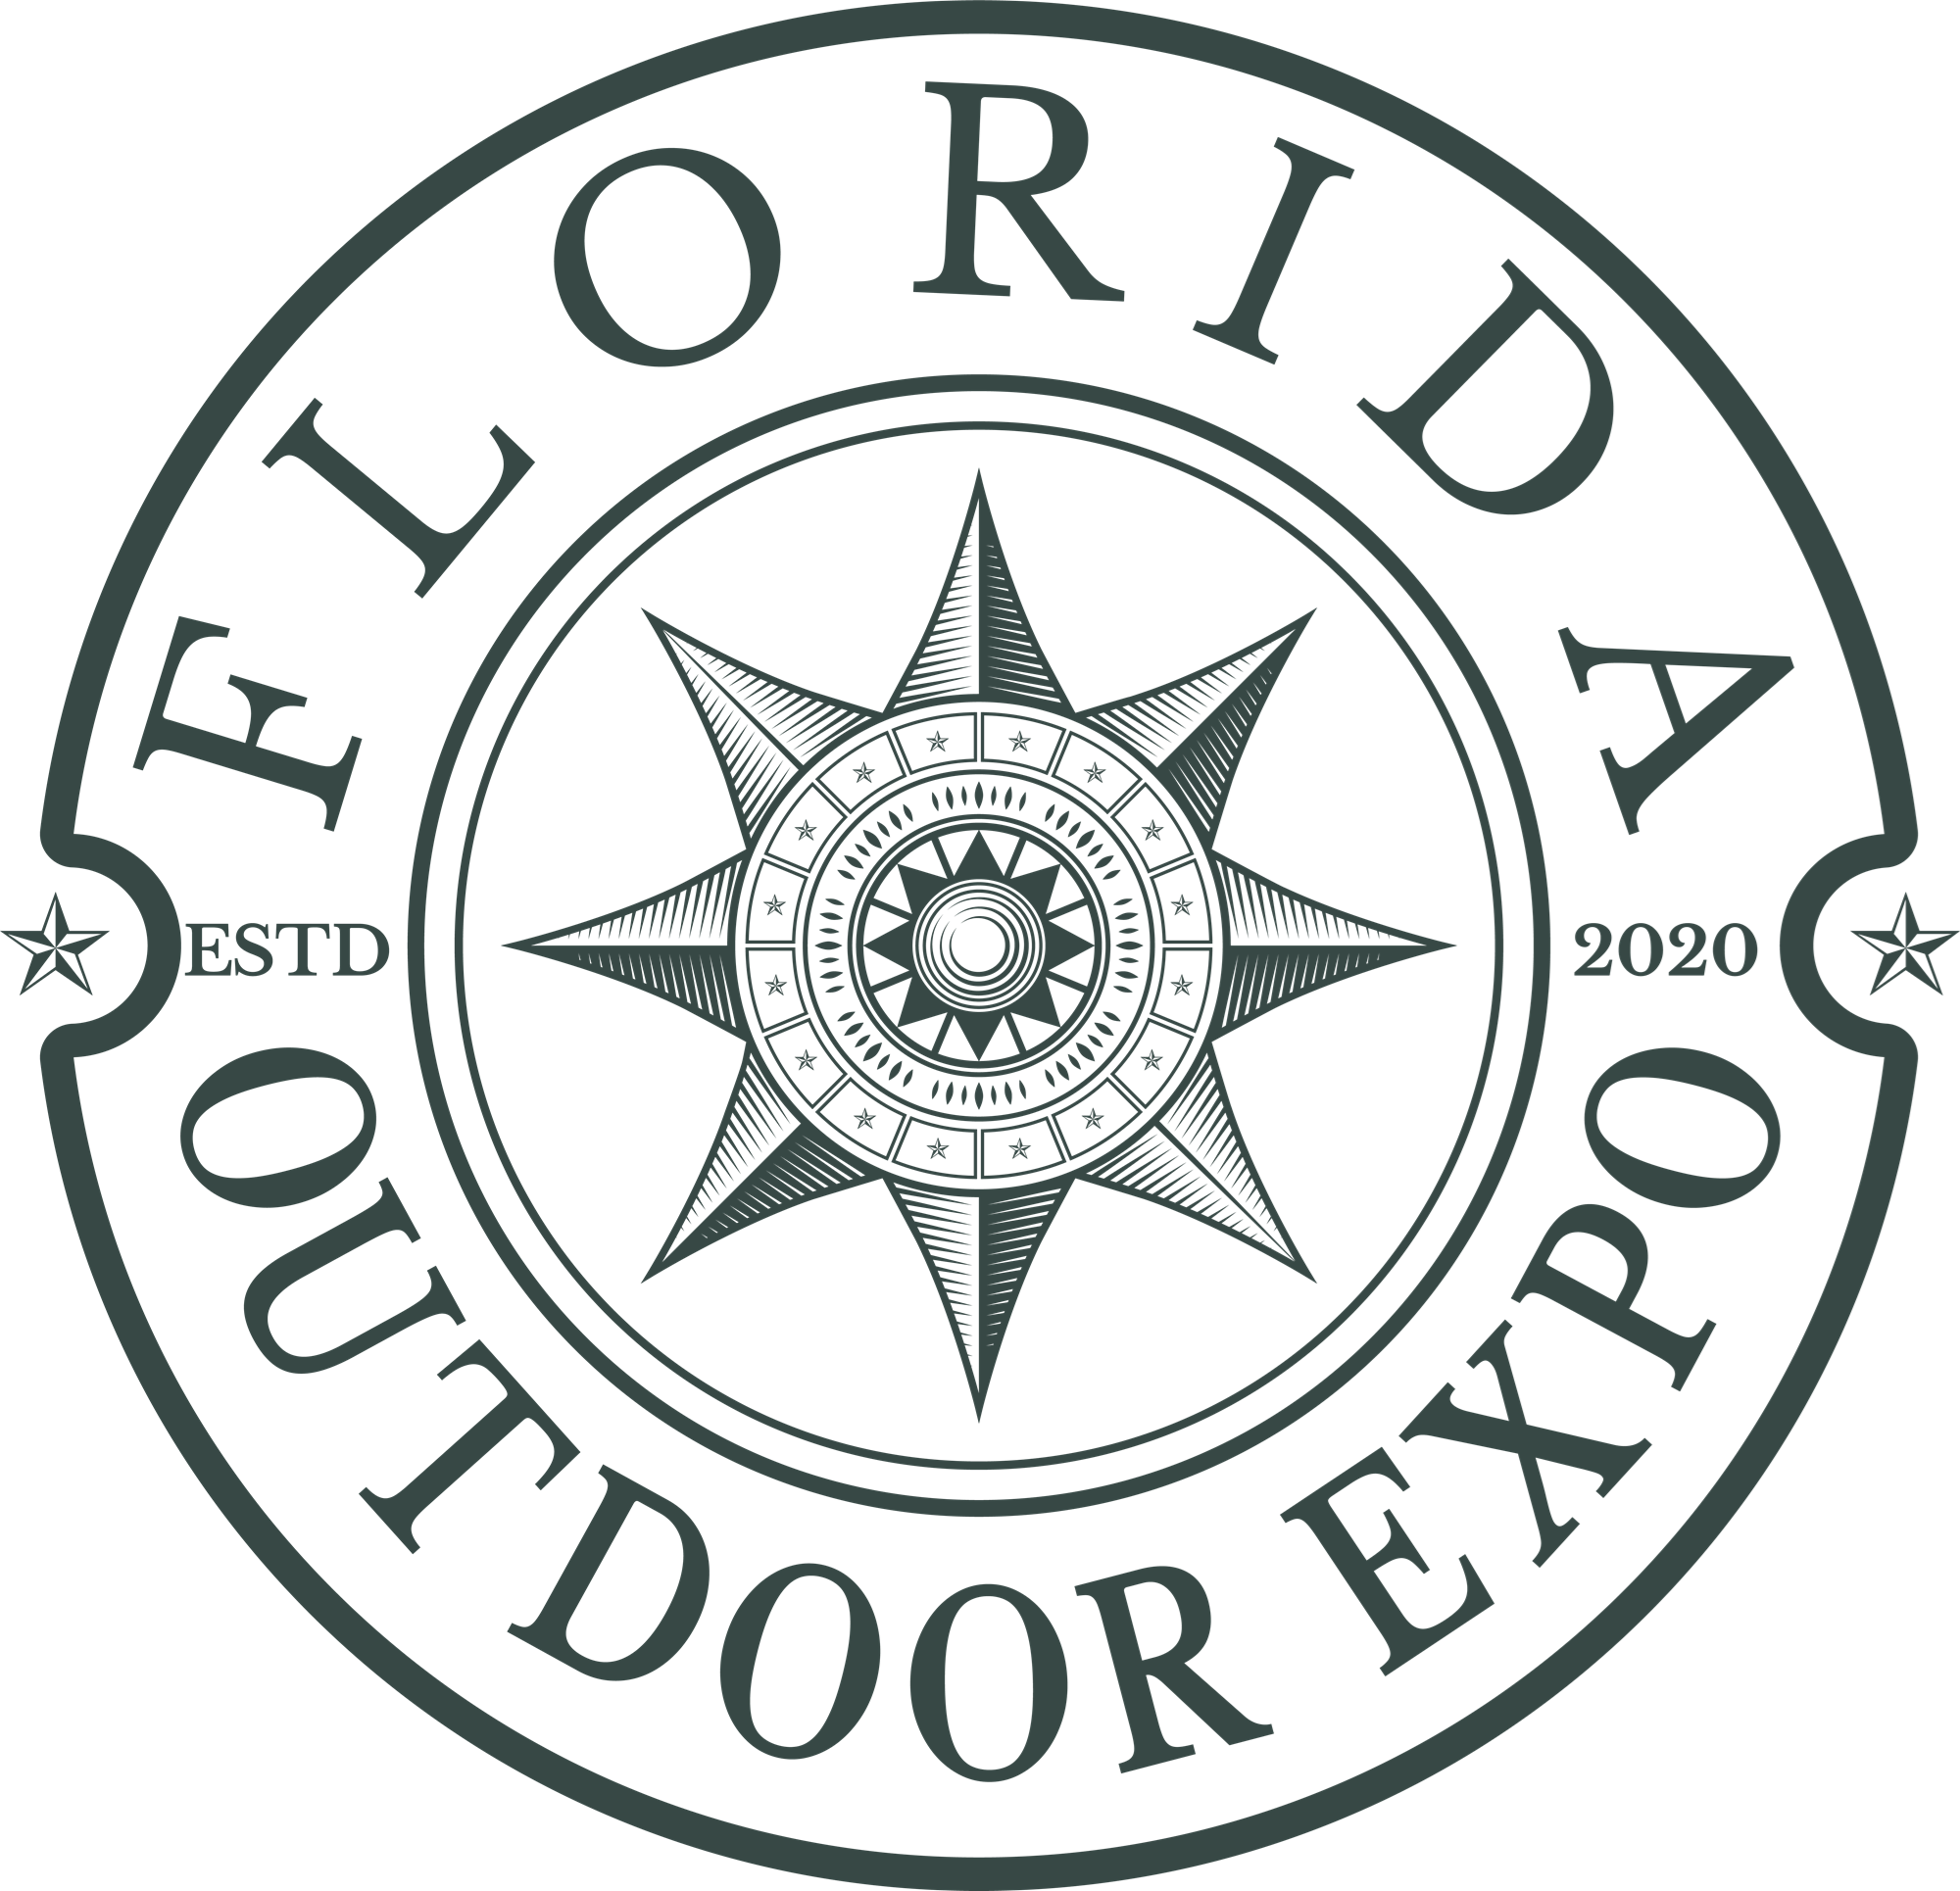 Florida Outdoor Expo at the South Florida Fairgrounds